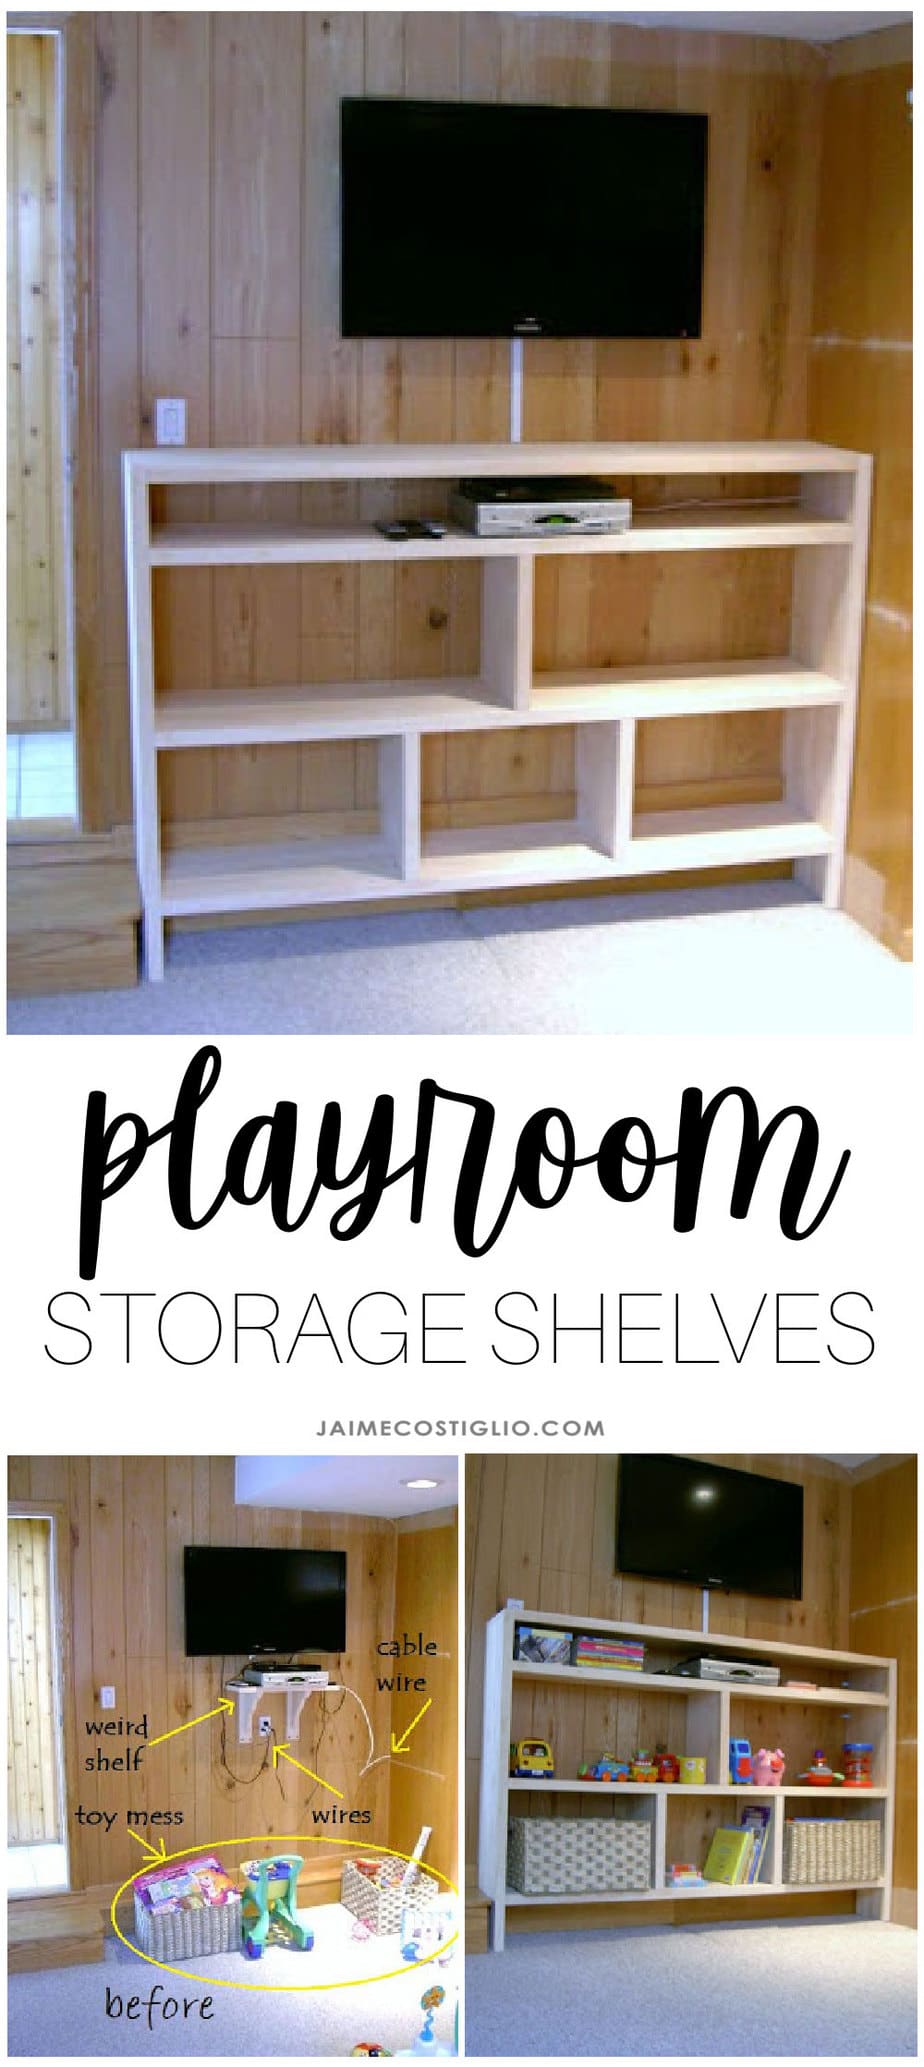 https://jaimecostiglio.com/wp-content/uploads/2011/06/storage-shelves-in-playroom.jpg